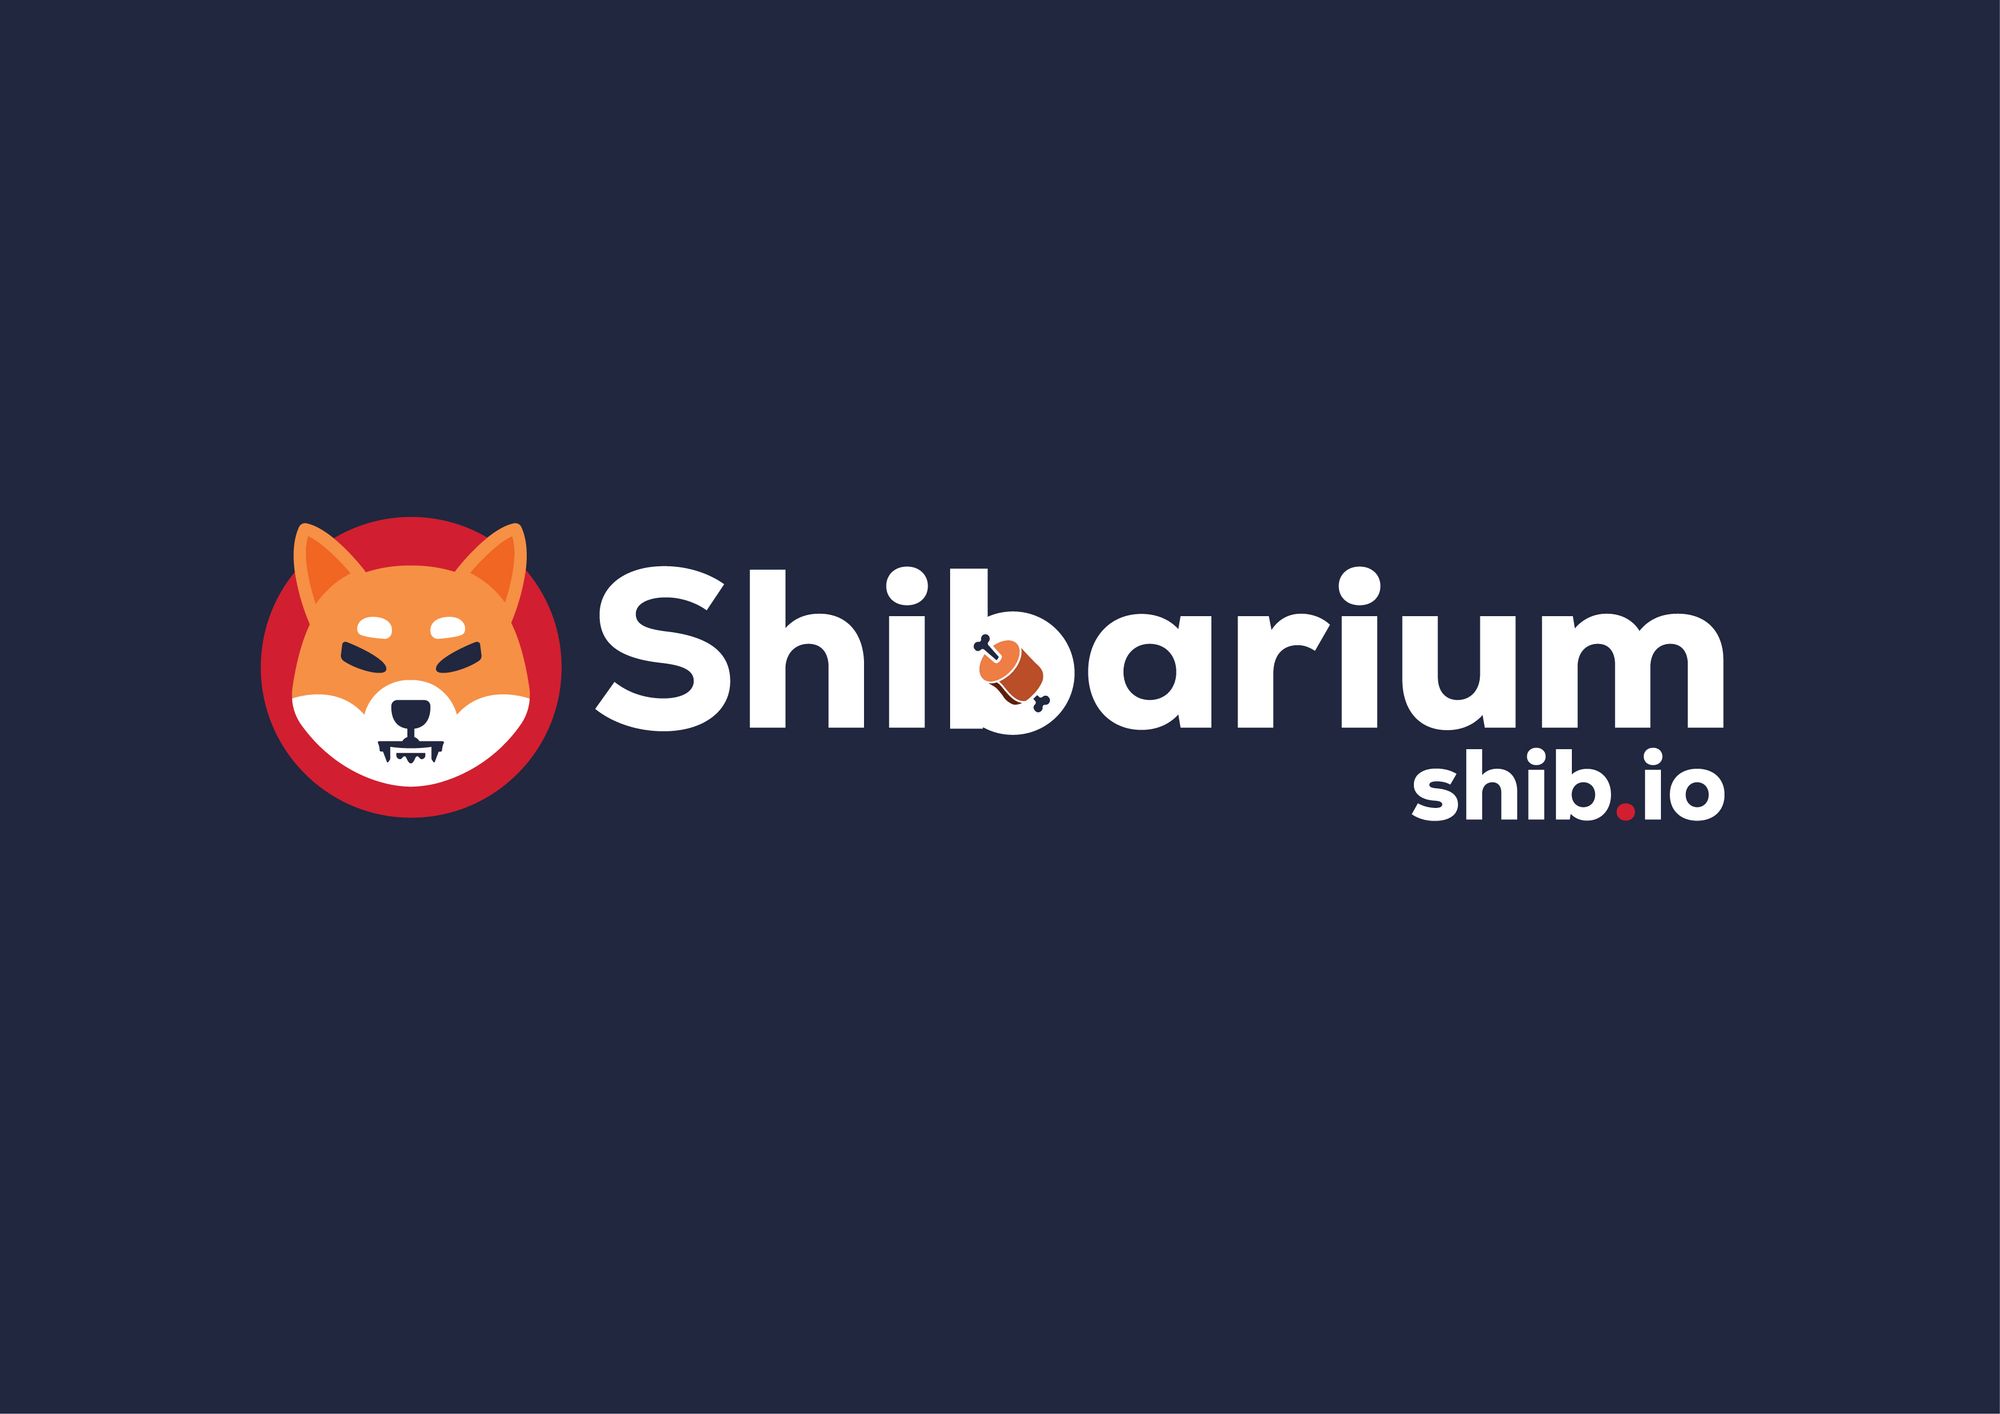 BONE: Paszport do Shibarium